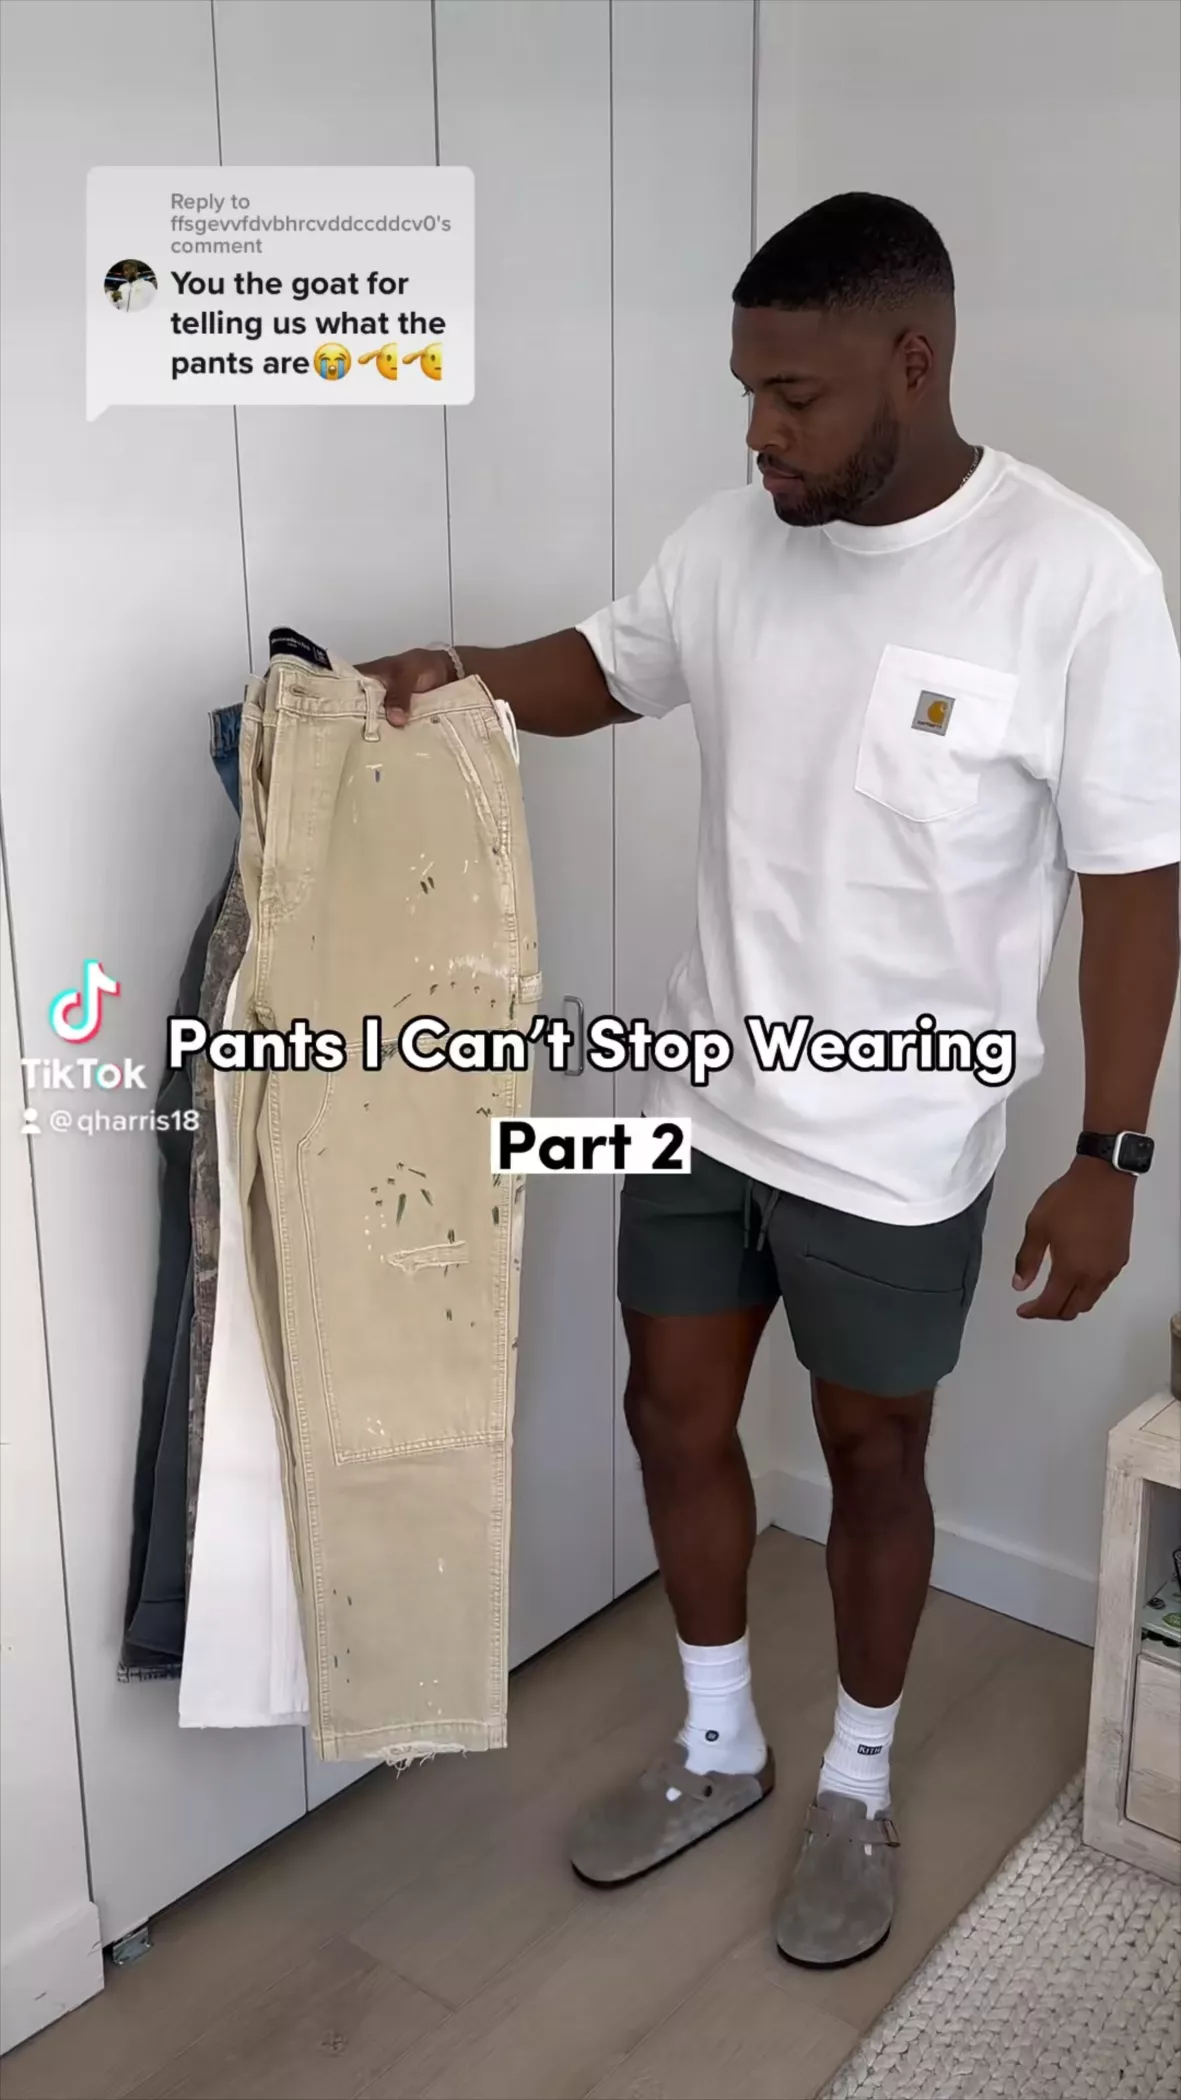 Pantaloni stile workwear in denim - Abbigliamento 1ABJD1